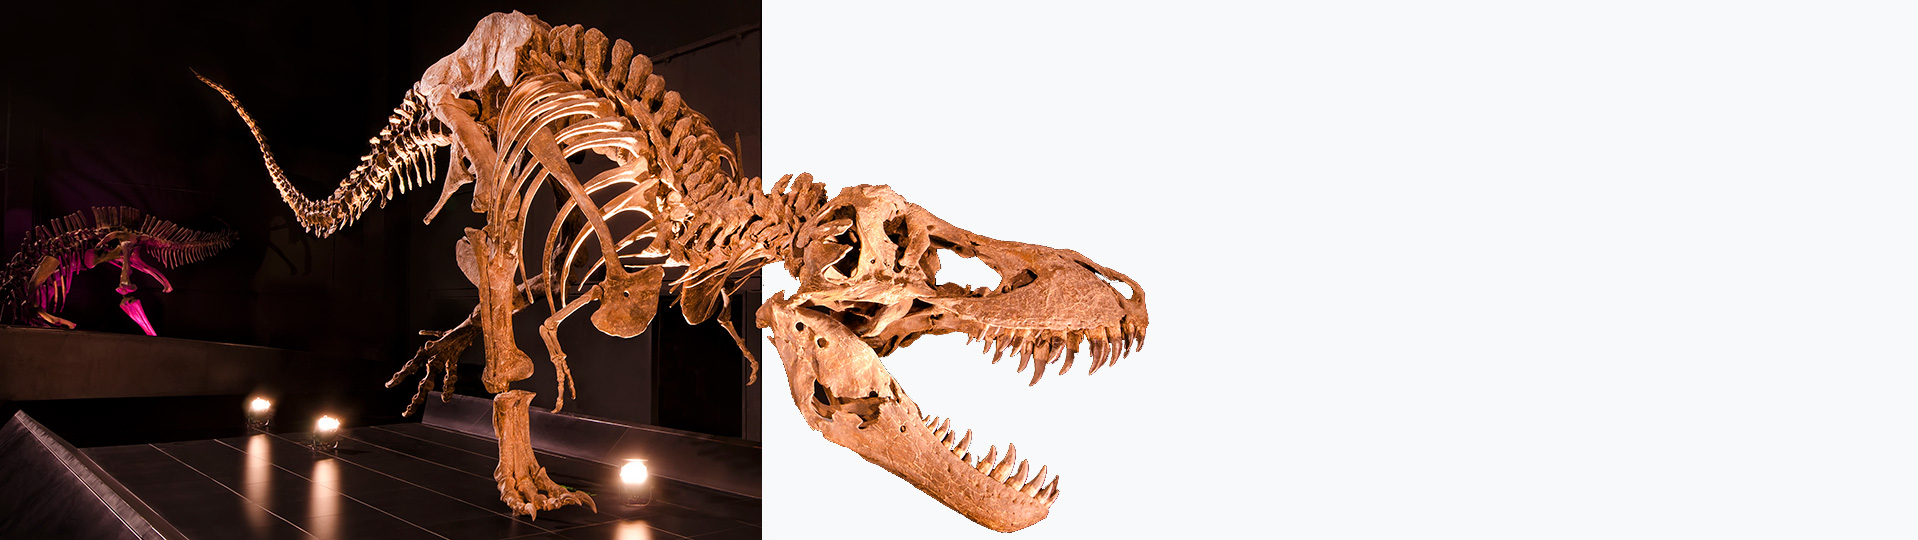 Tyrannosaurus Rex, Musée paléontologique de Teruel